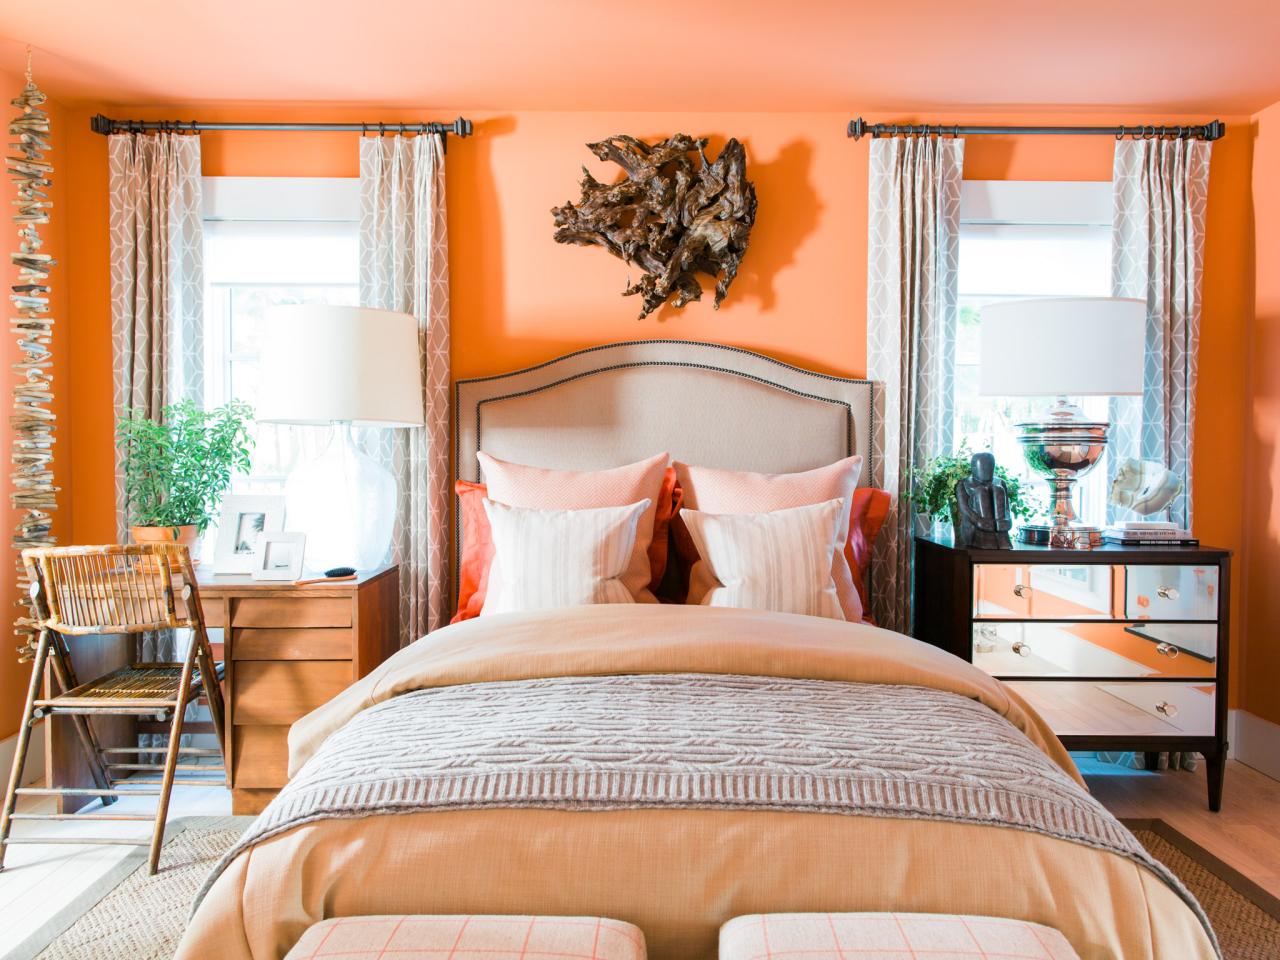 How to Design a Happy Bedroom HGTV's Decorating & Design